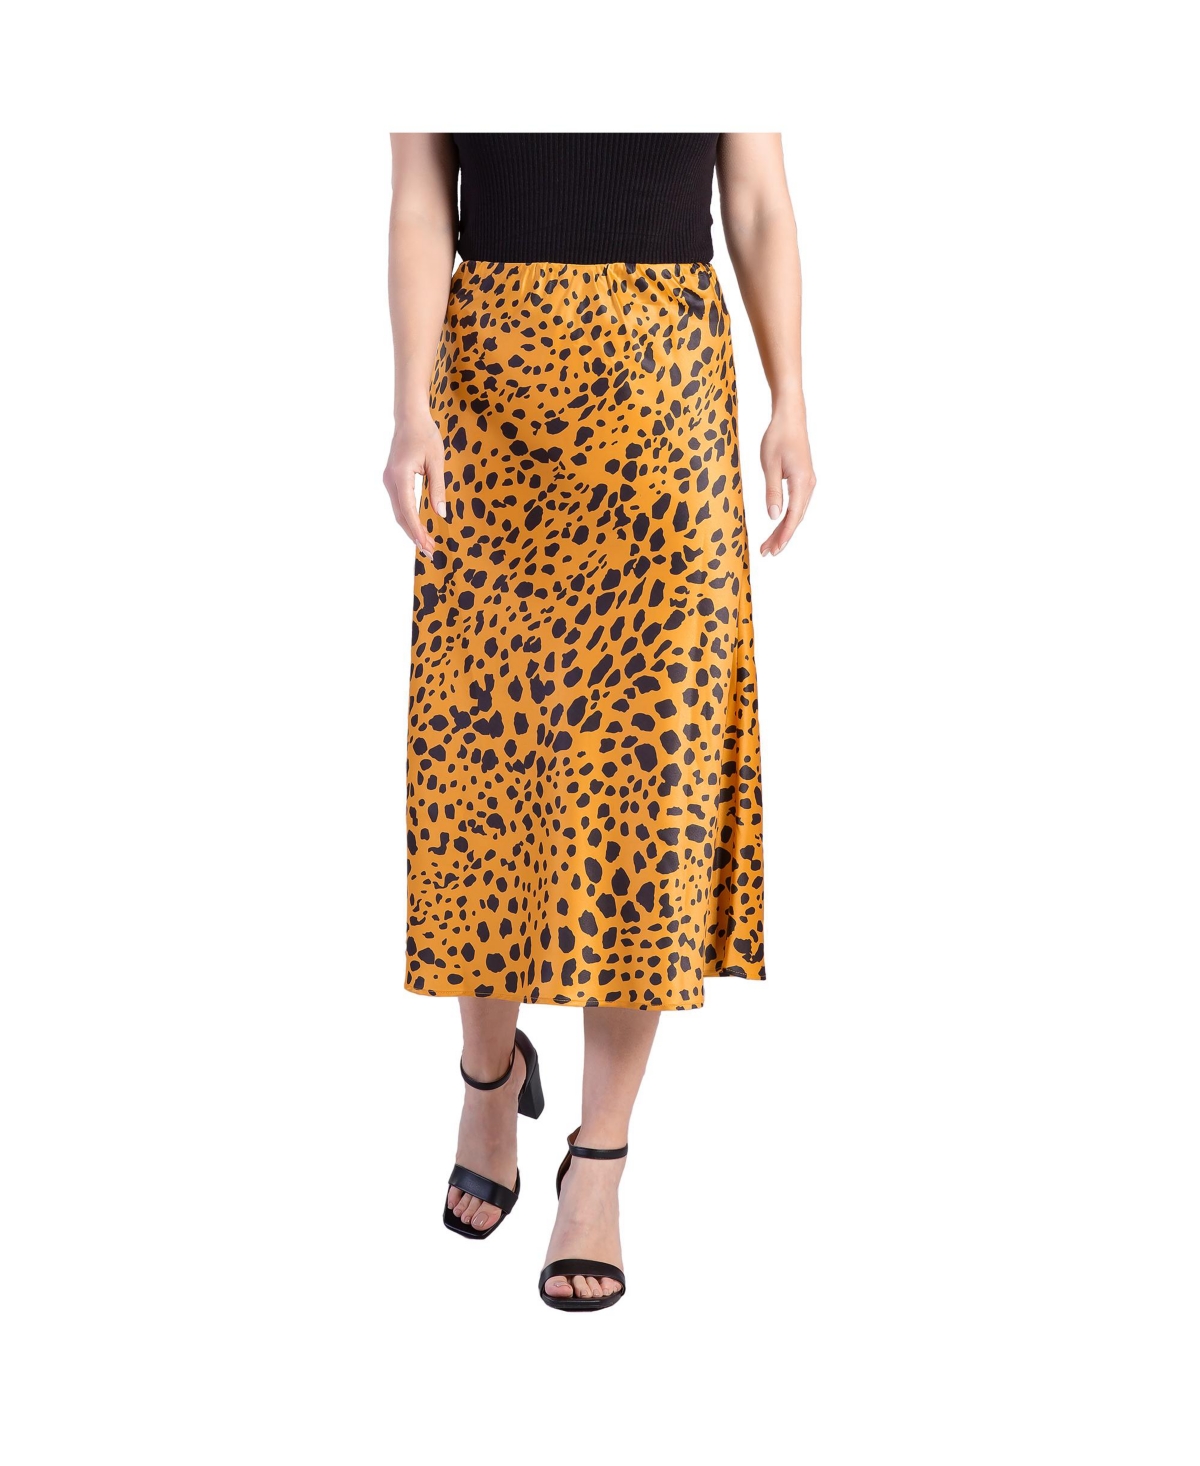 Women's Silky Sateen Leopard Print Midi Skirt - Golden leopard